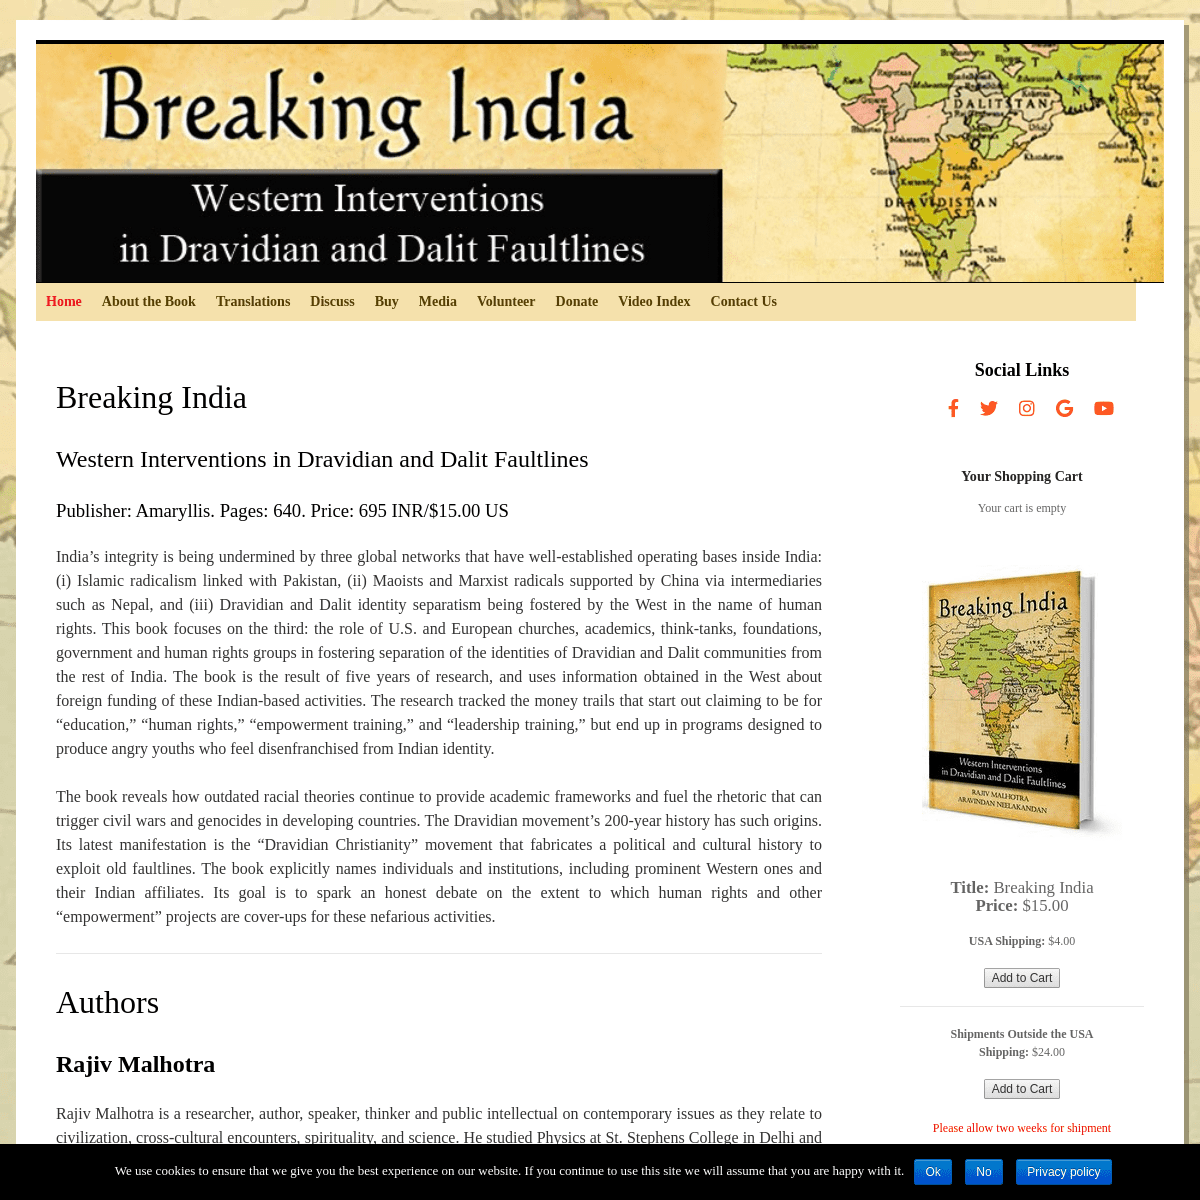 A complete backup of breakingindia.com